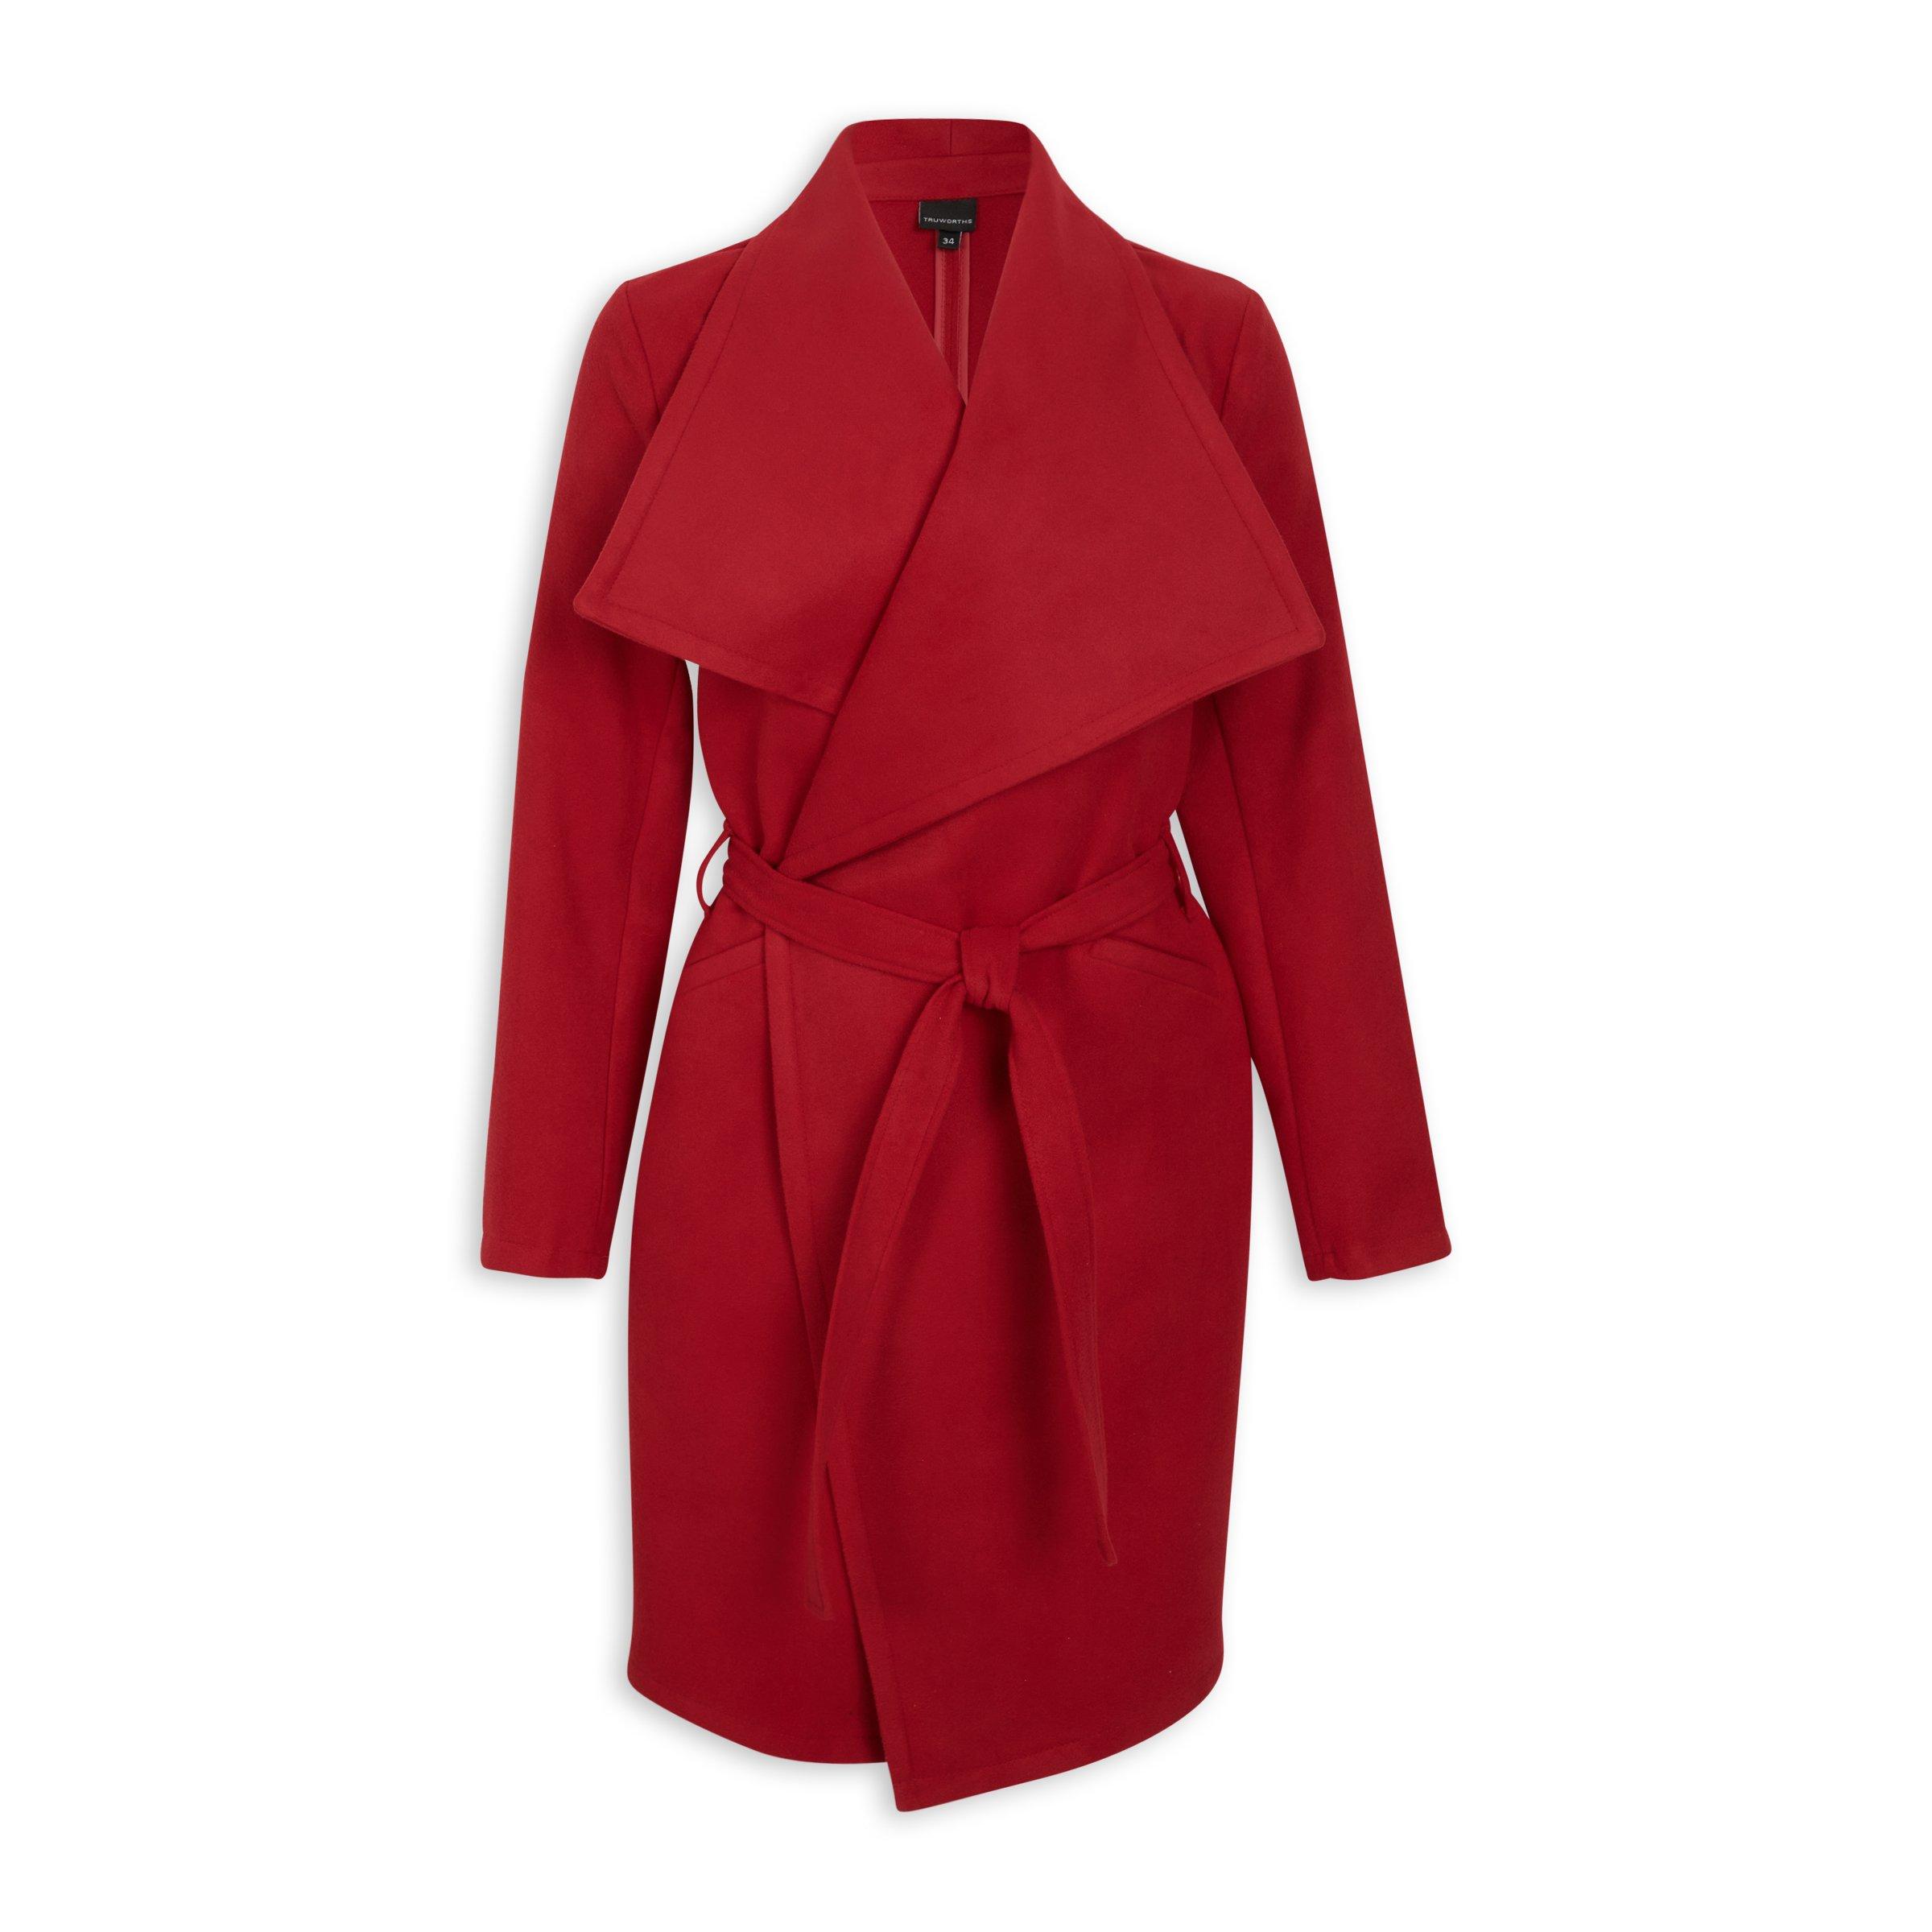 Truworths Red Belted Coat (3093003) | Truworths.co.za